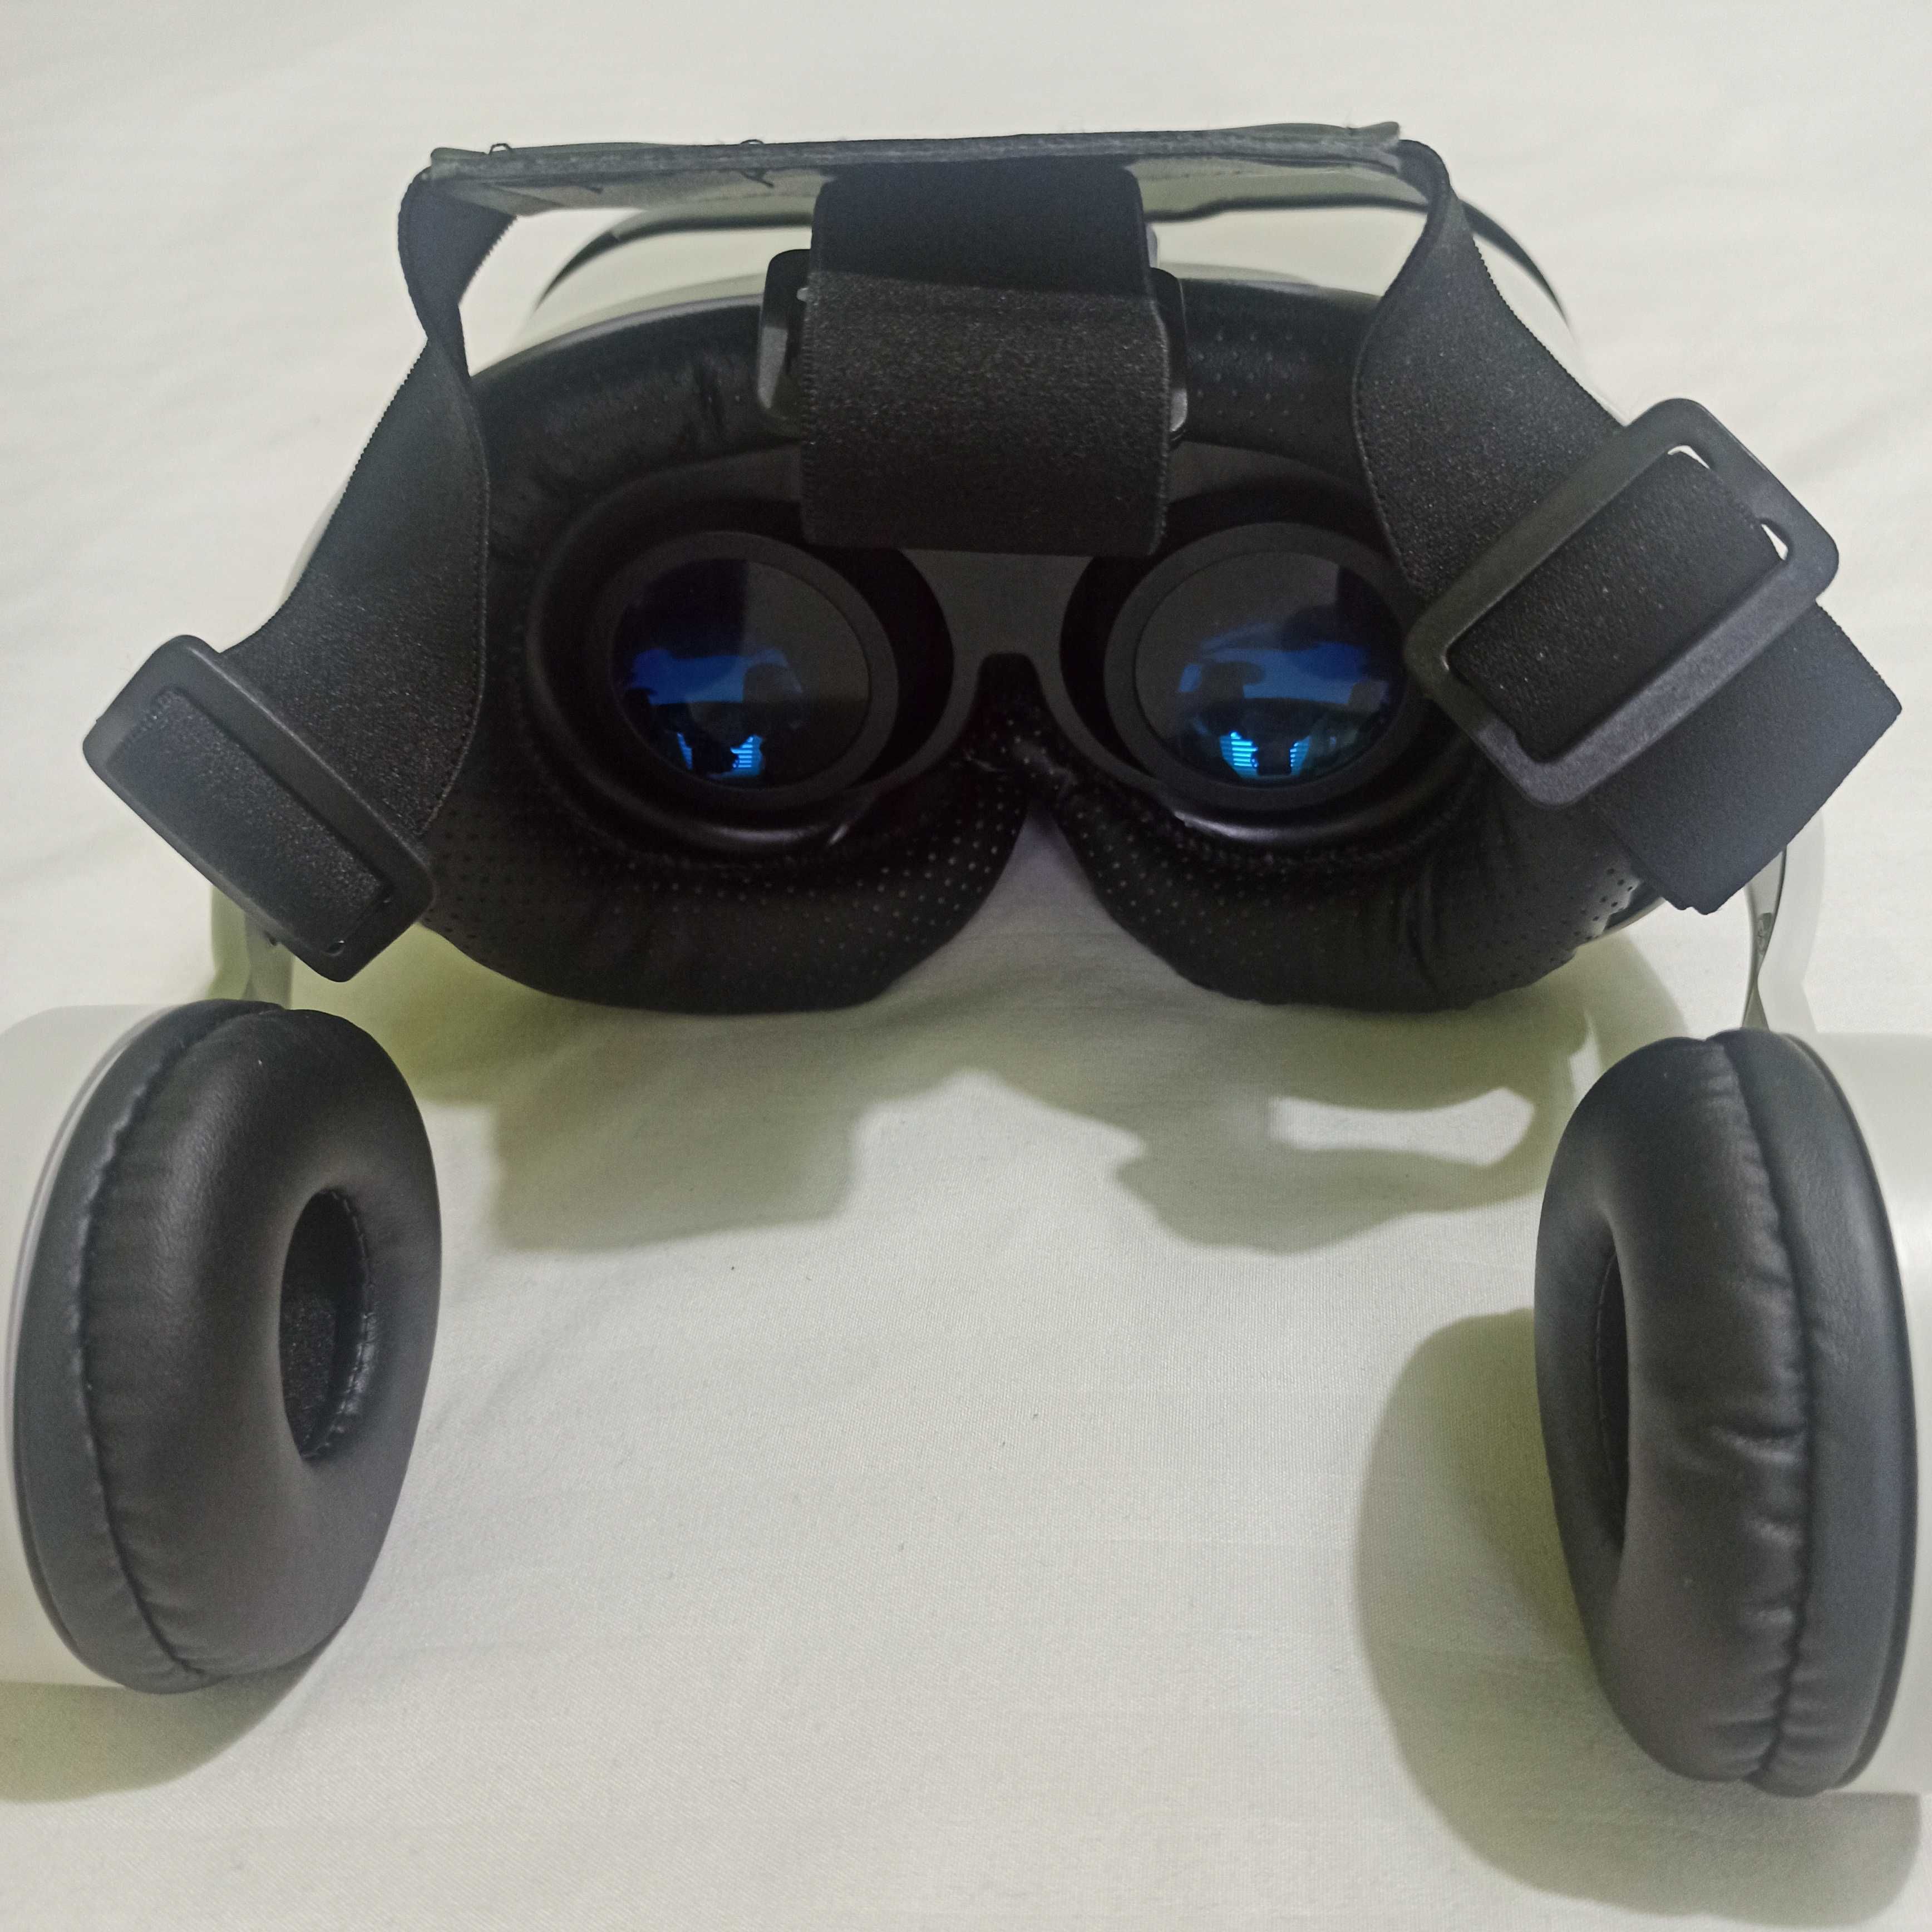 Vand ochelari VR Park J60 cu functie bluetooth, controller si casti